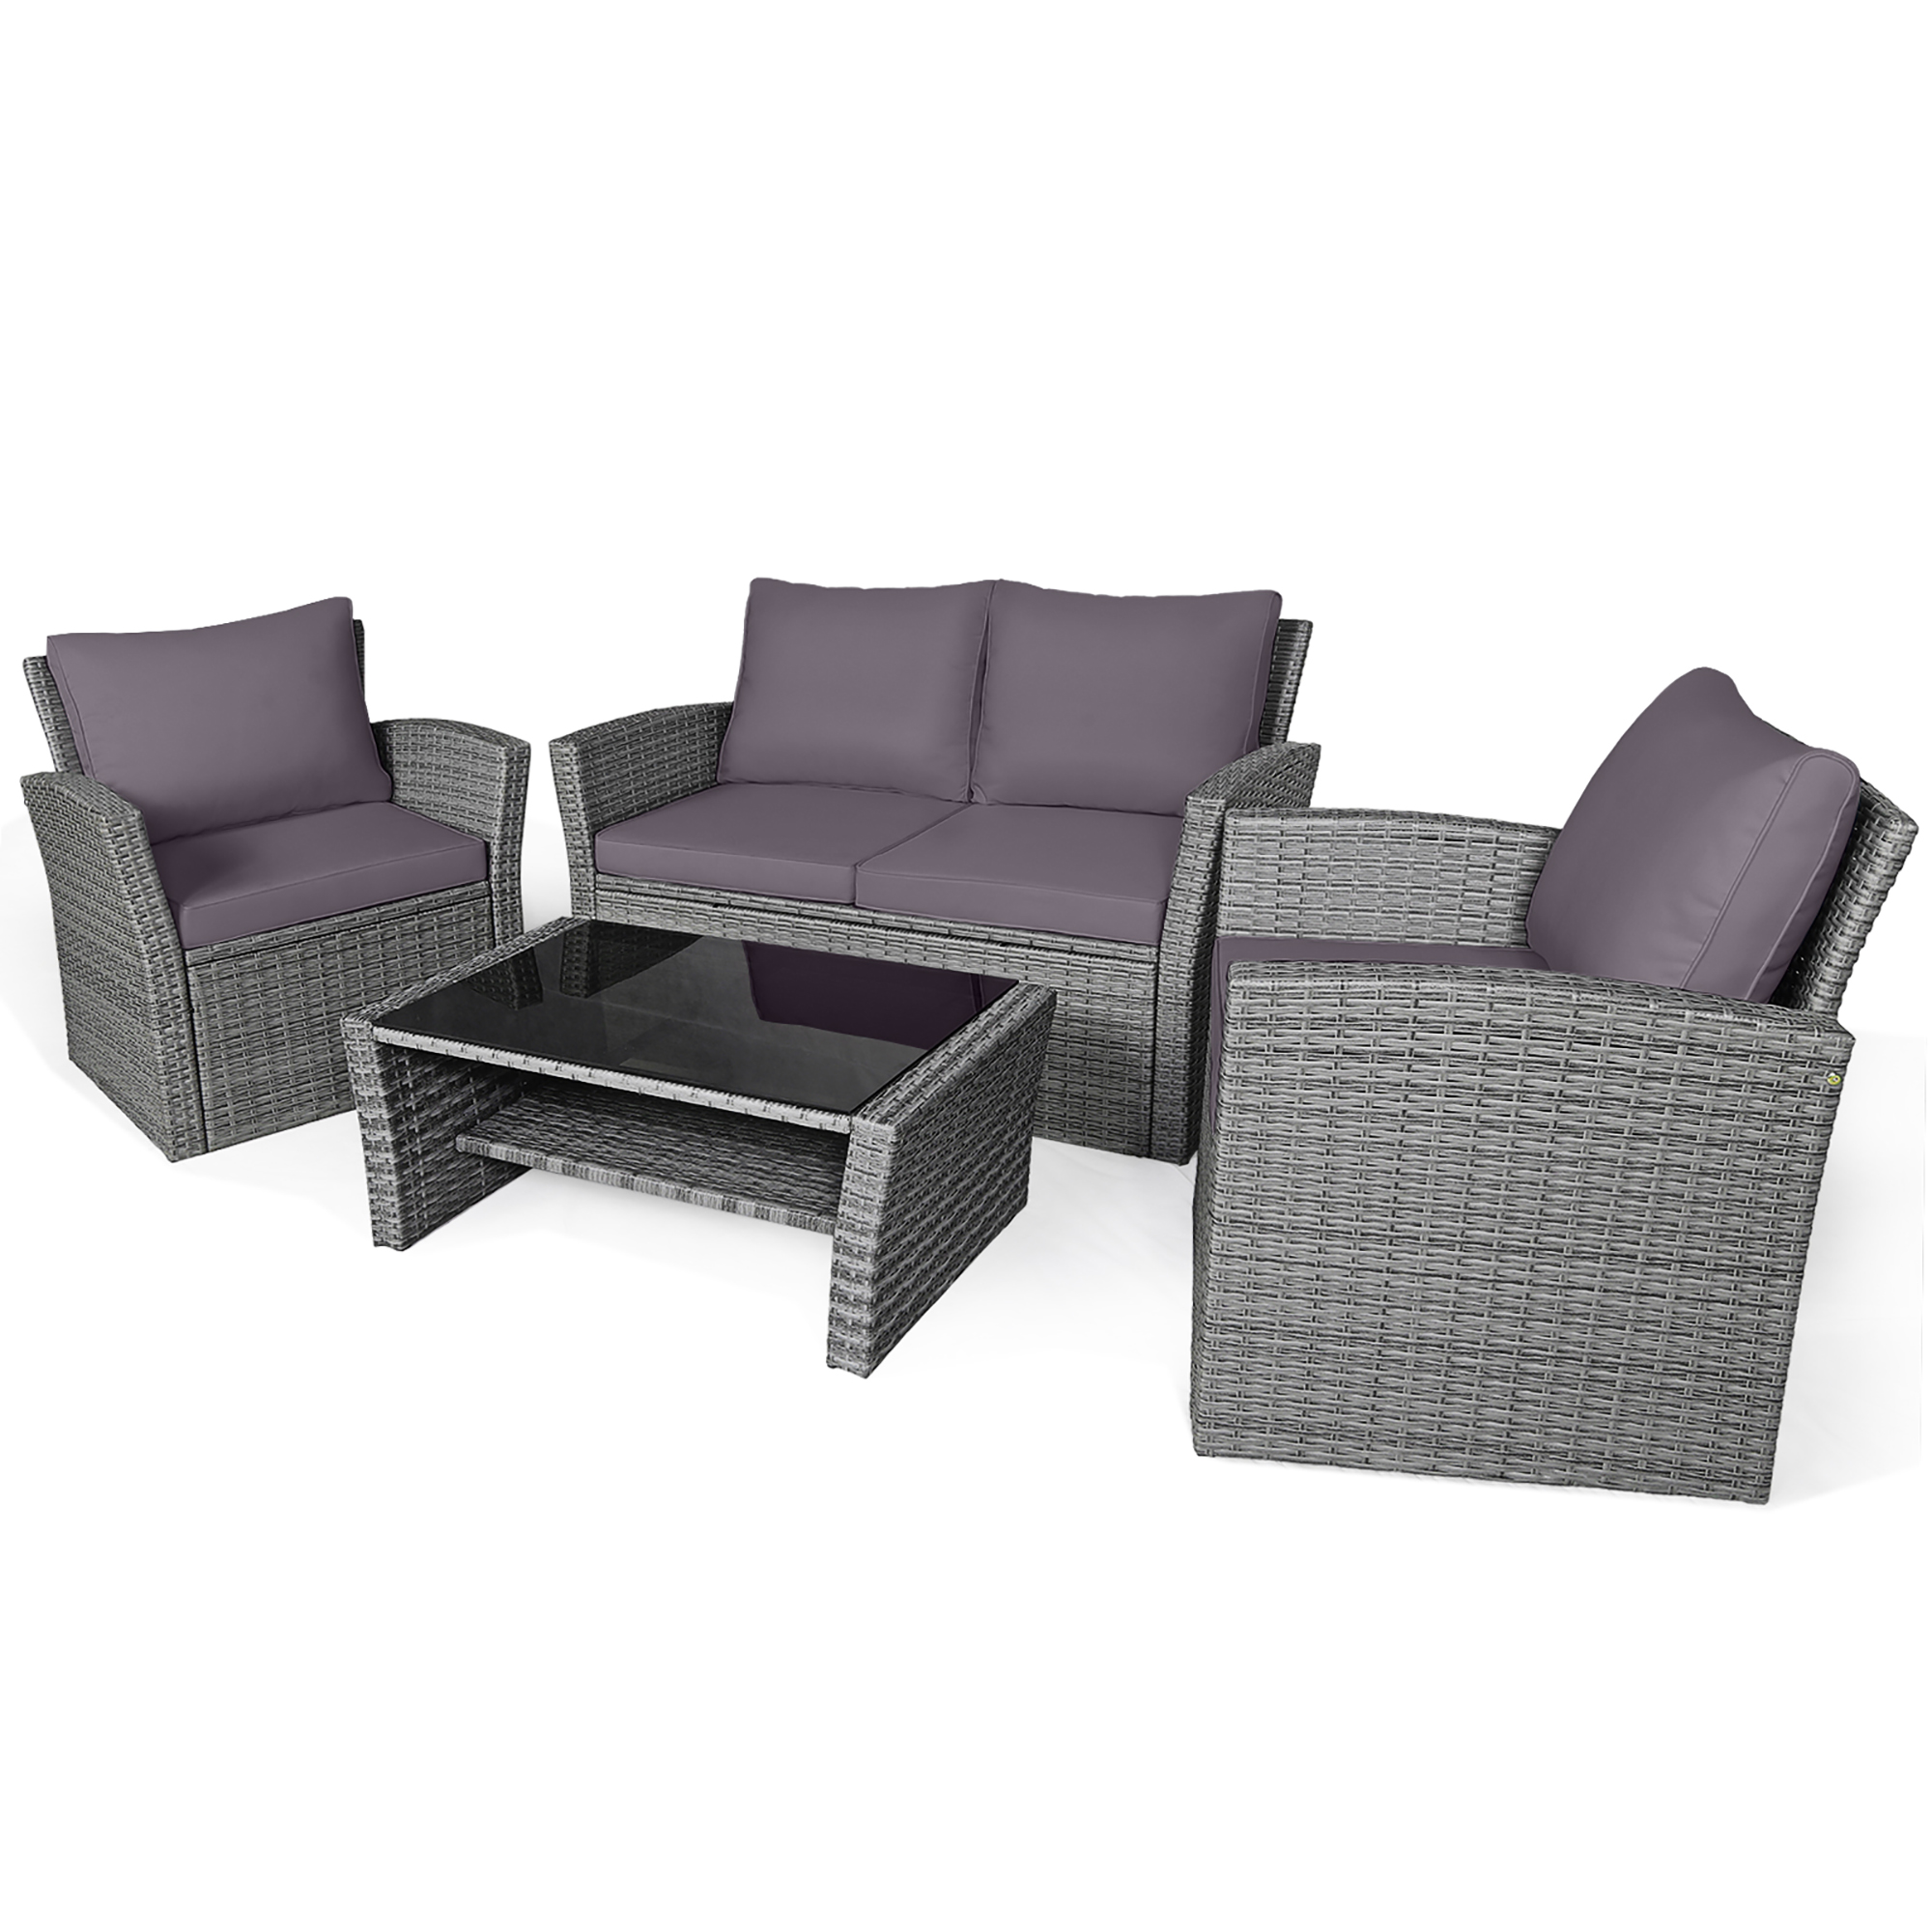 Gymax 4PCS Patio Rattan Conversation Set Outdoor Furniture Set w/ Grey Cushions - image 2 of 10